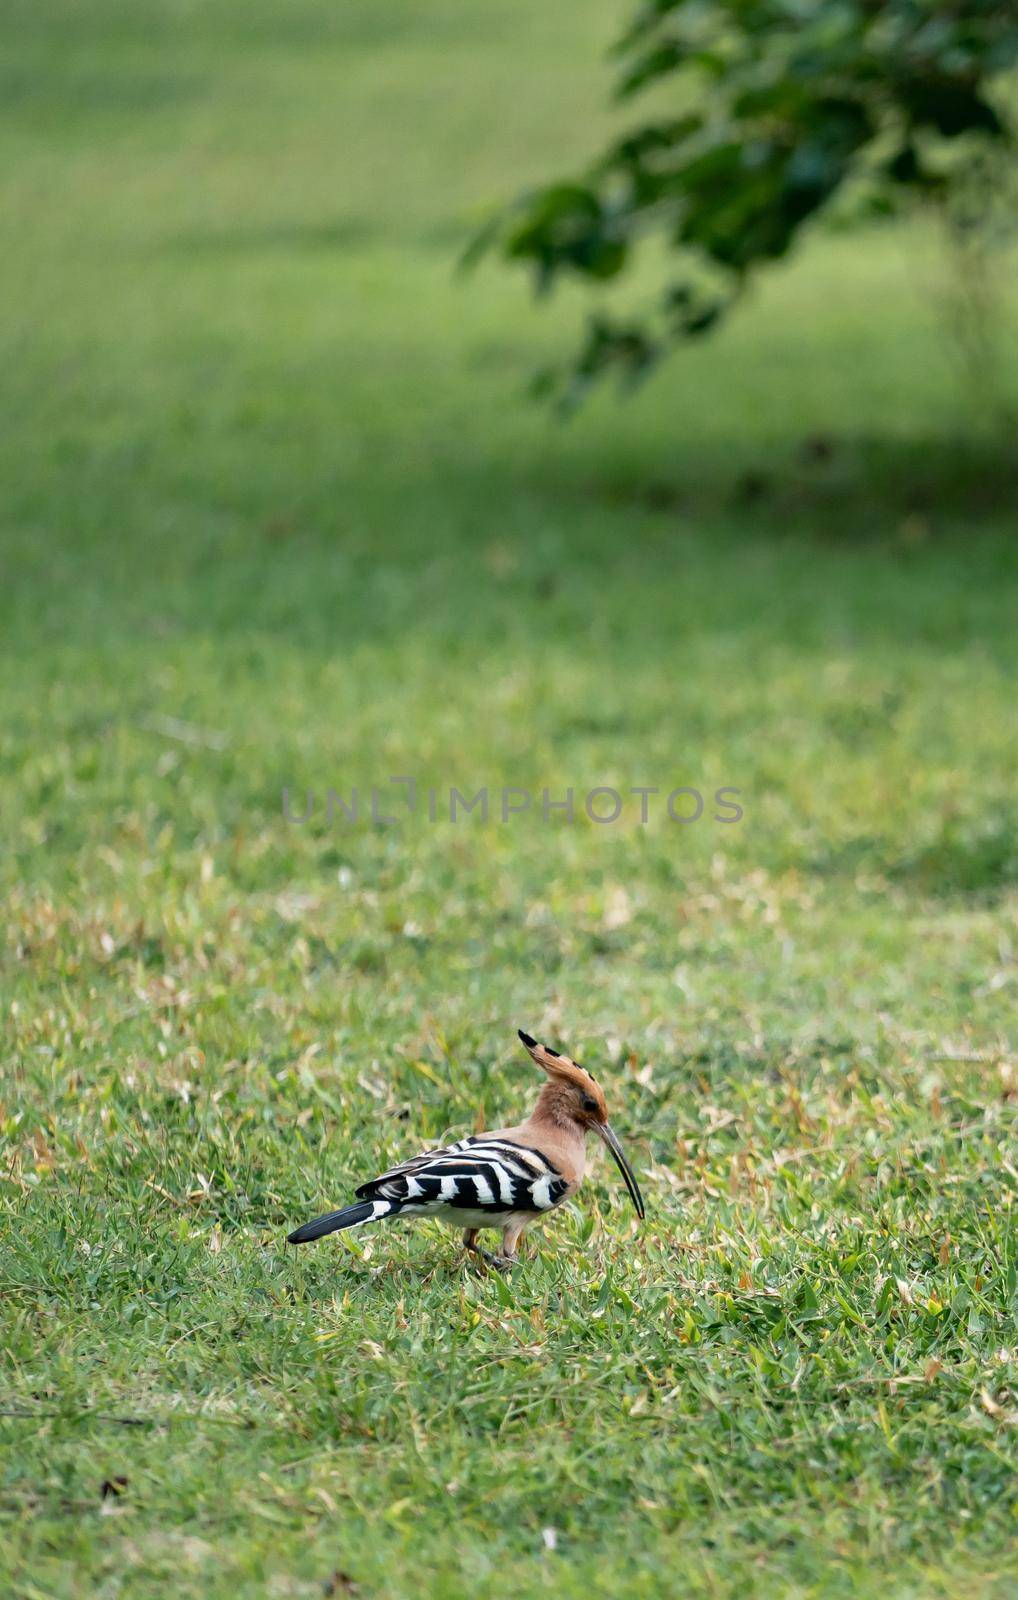 Eurasian hoopoe (Upupa epops) walking searching for food on the green yard.